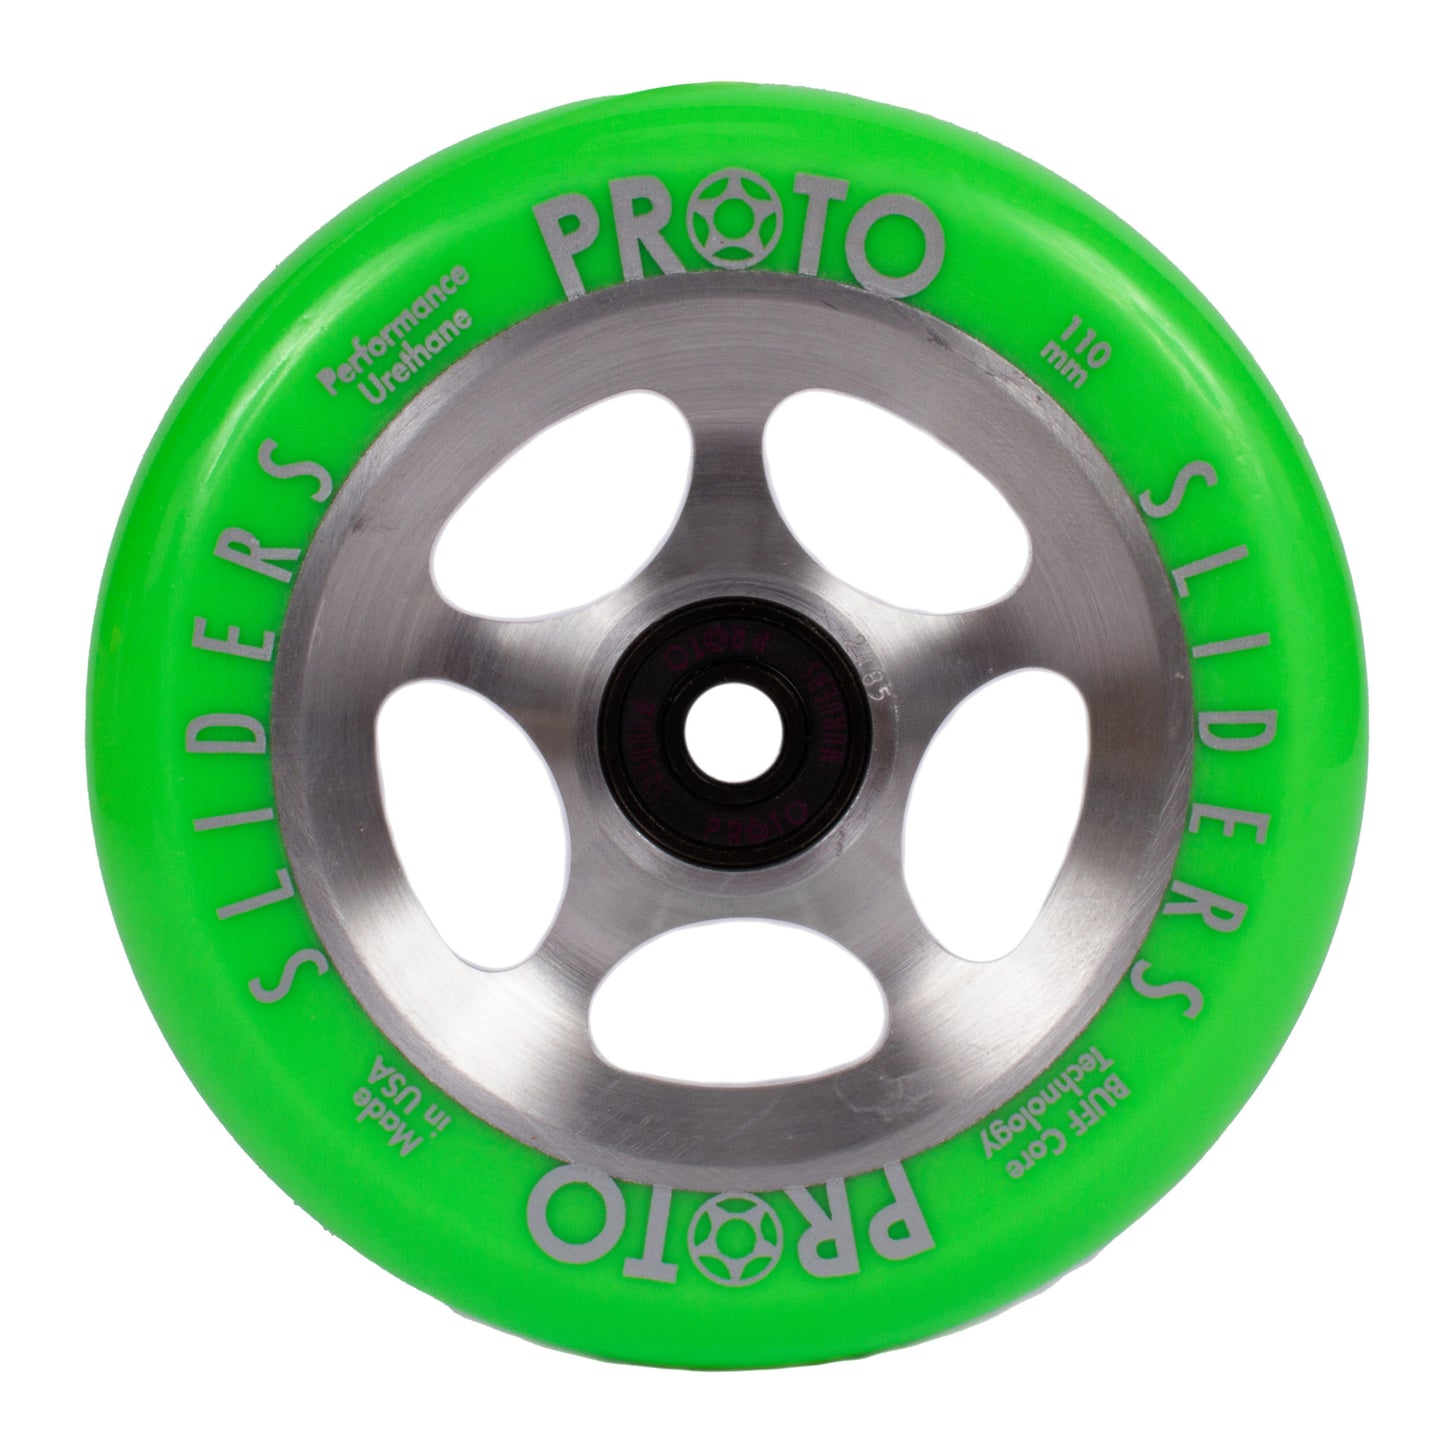 PROTO – StarBright Sliders 110mm (Neon Green on RAW)